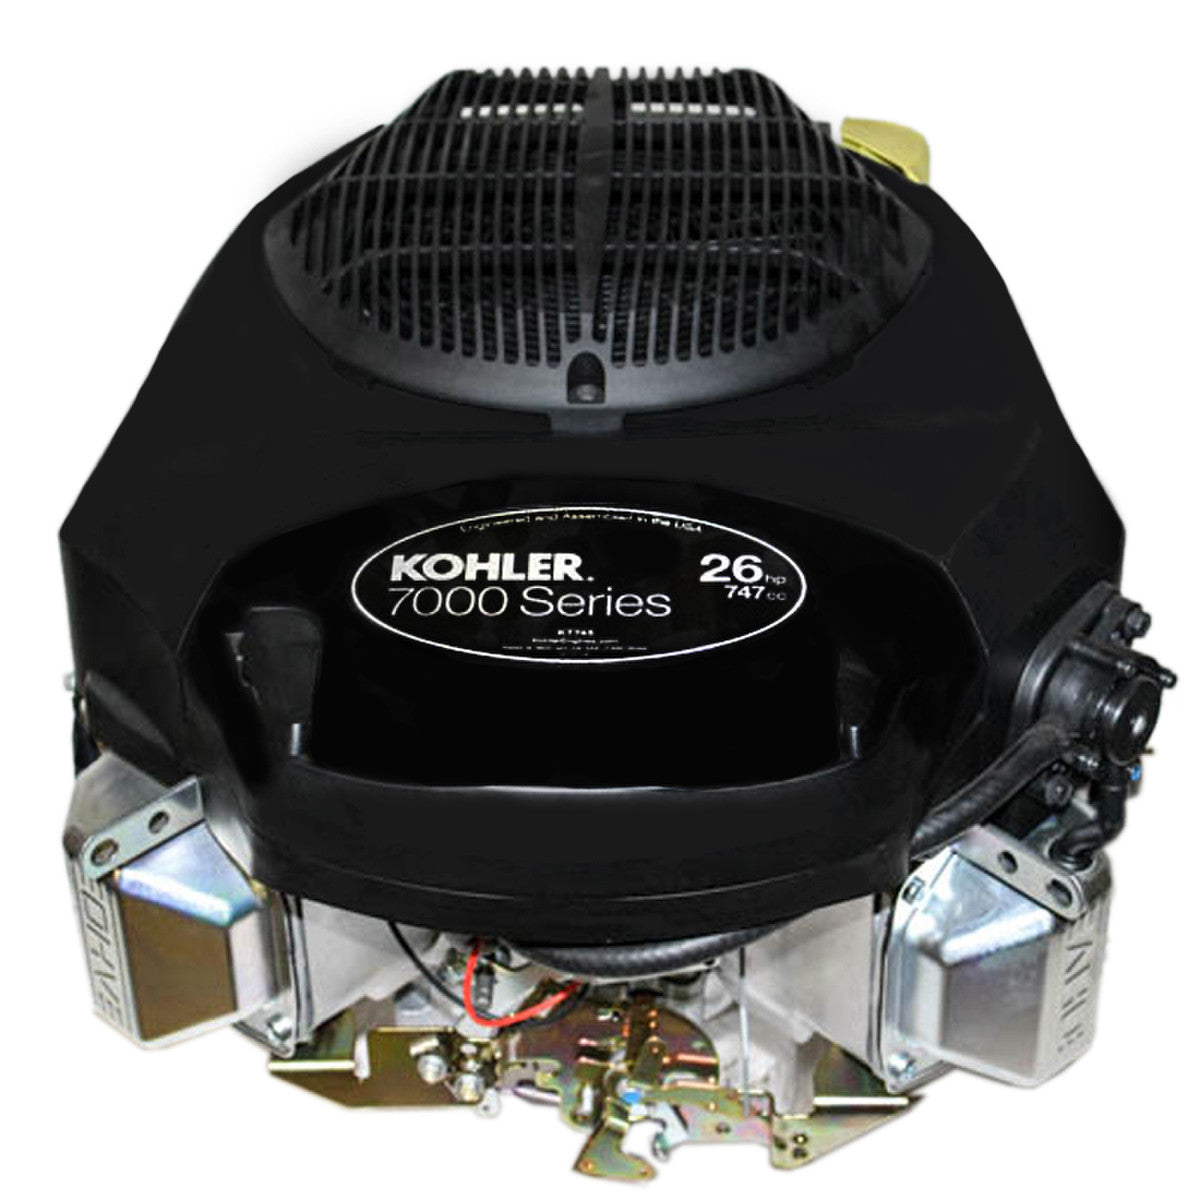 Kohler 7000 Series 26HP Replacement Engine #KT745-3061